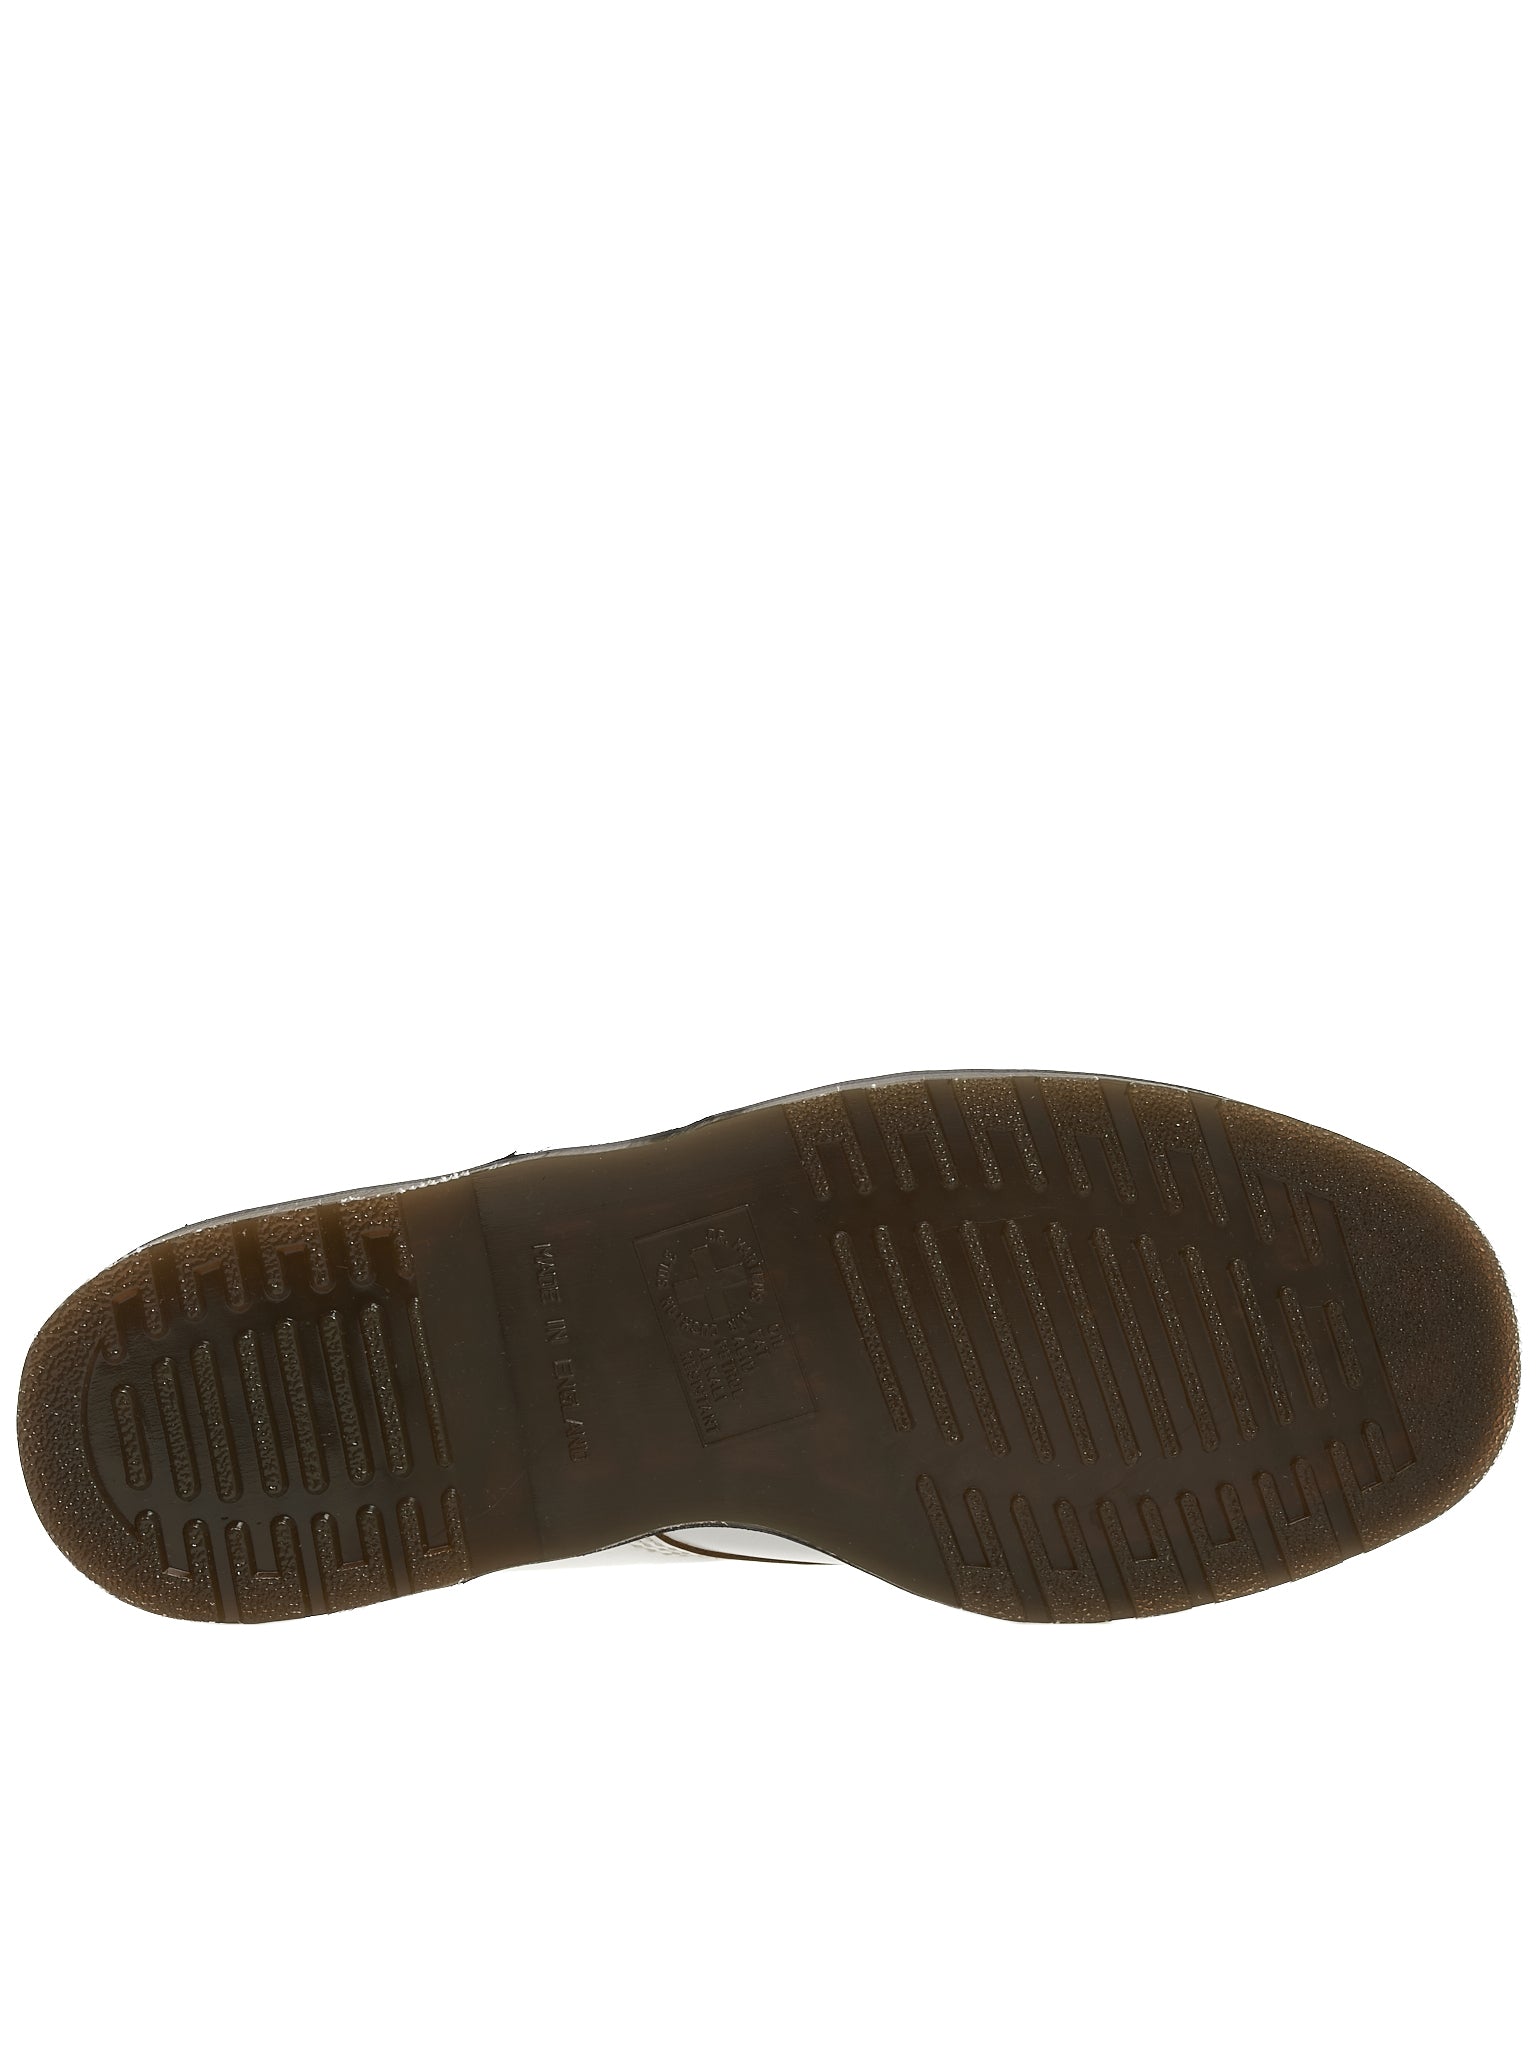 Dr. Martens 1460 Vintage Boots | H. Lorenzo - bottom